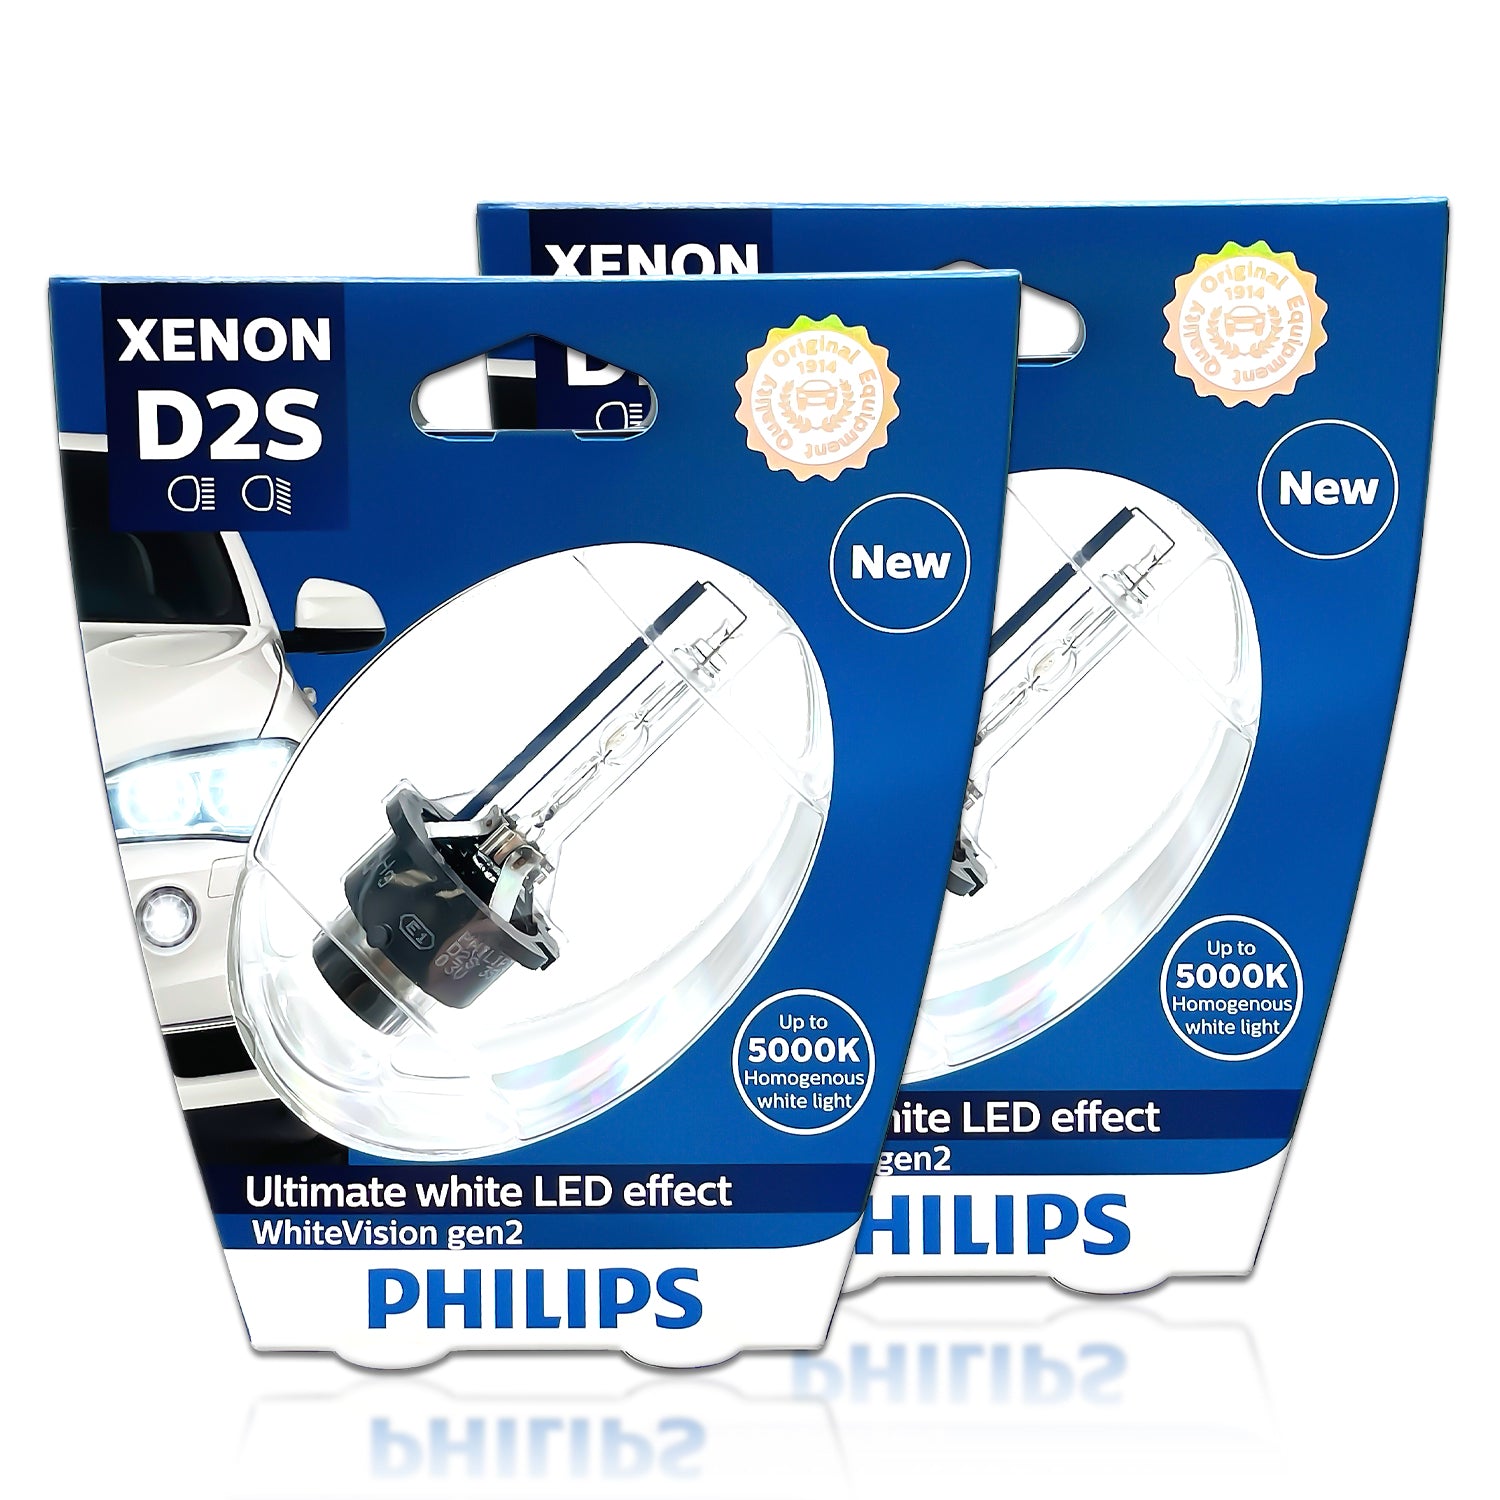 Philips D2S Xenon HID HeadLight Bulb, 1-Pack, 534947